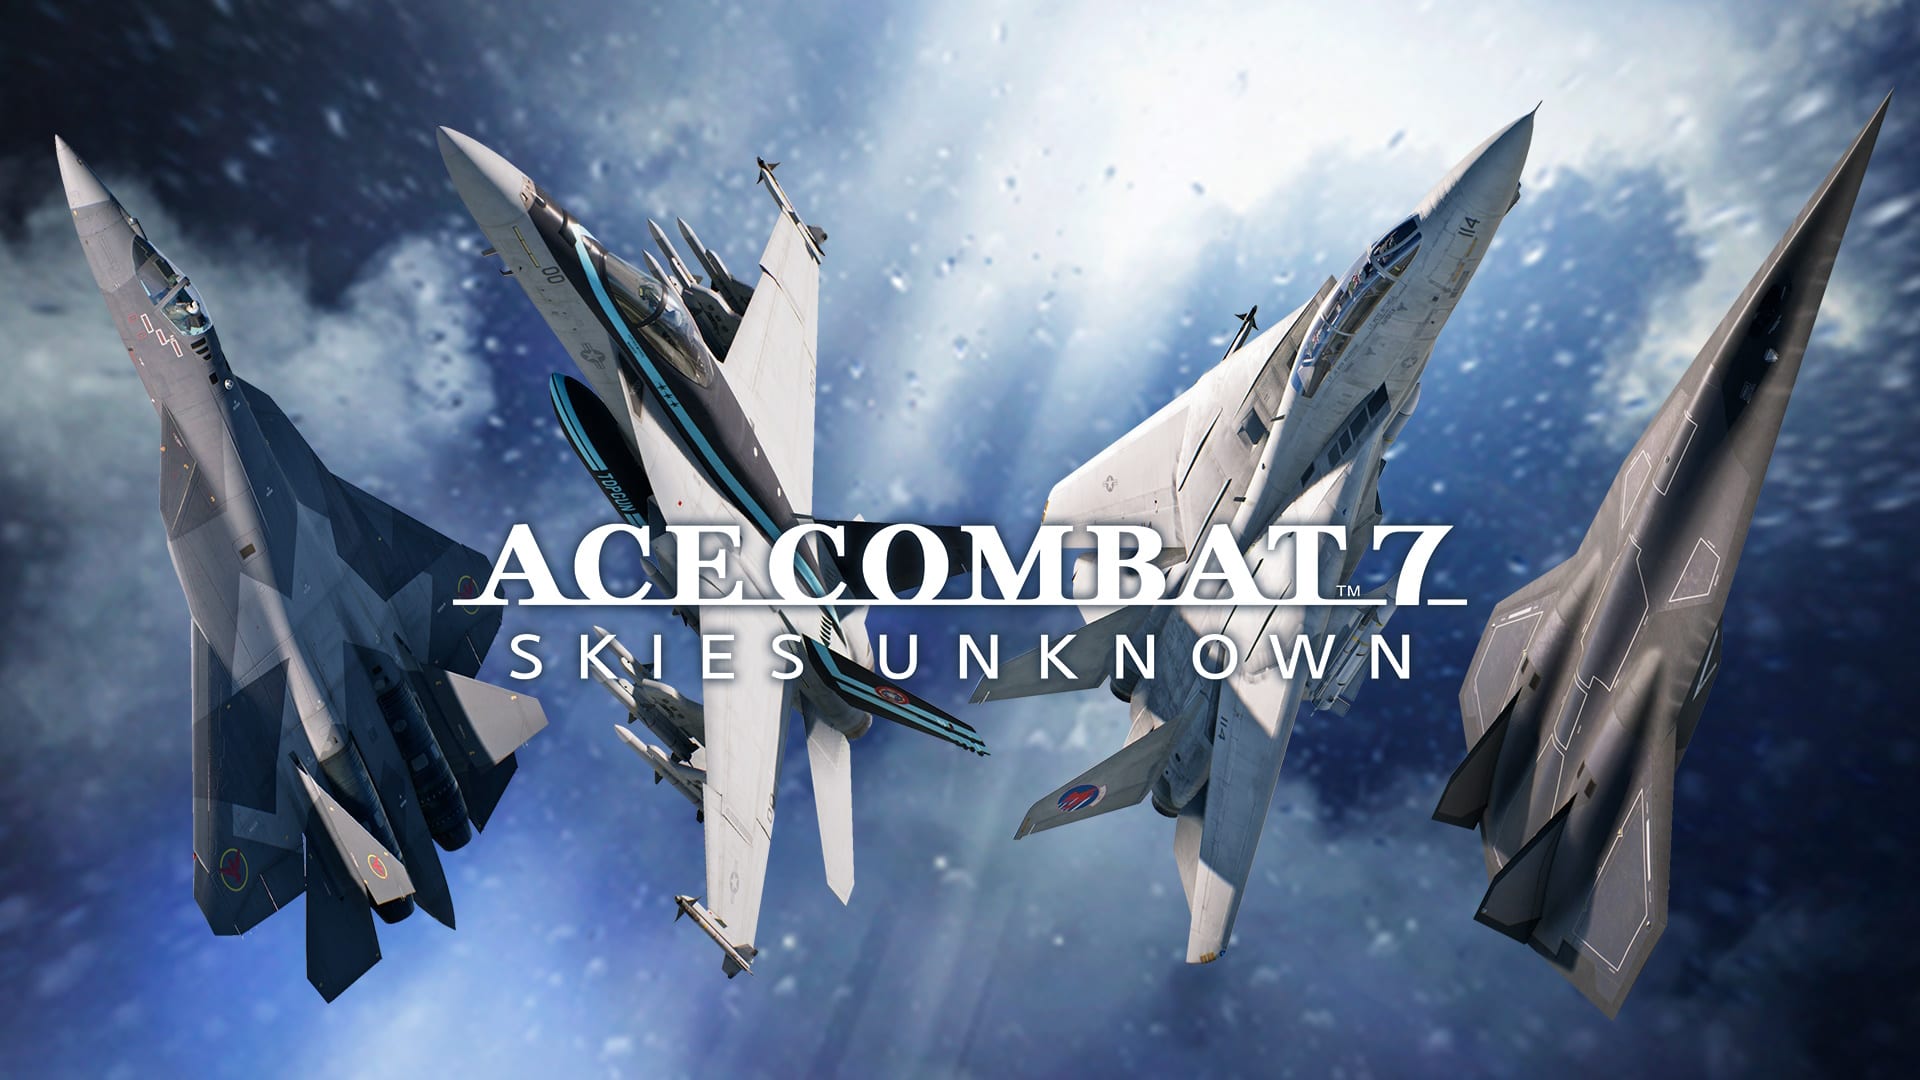 ACE COMBAT™7: SKIES UNKNOWN - Ensemble TOP GUN: Maverick